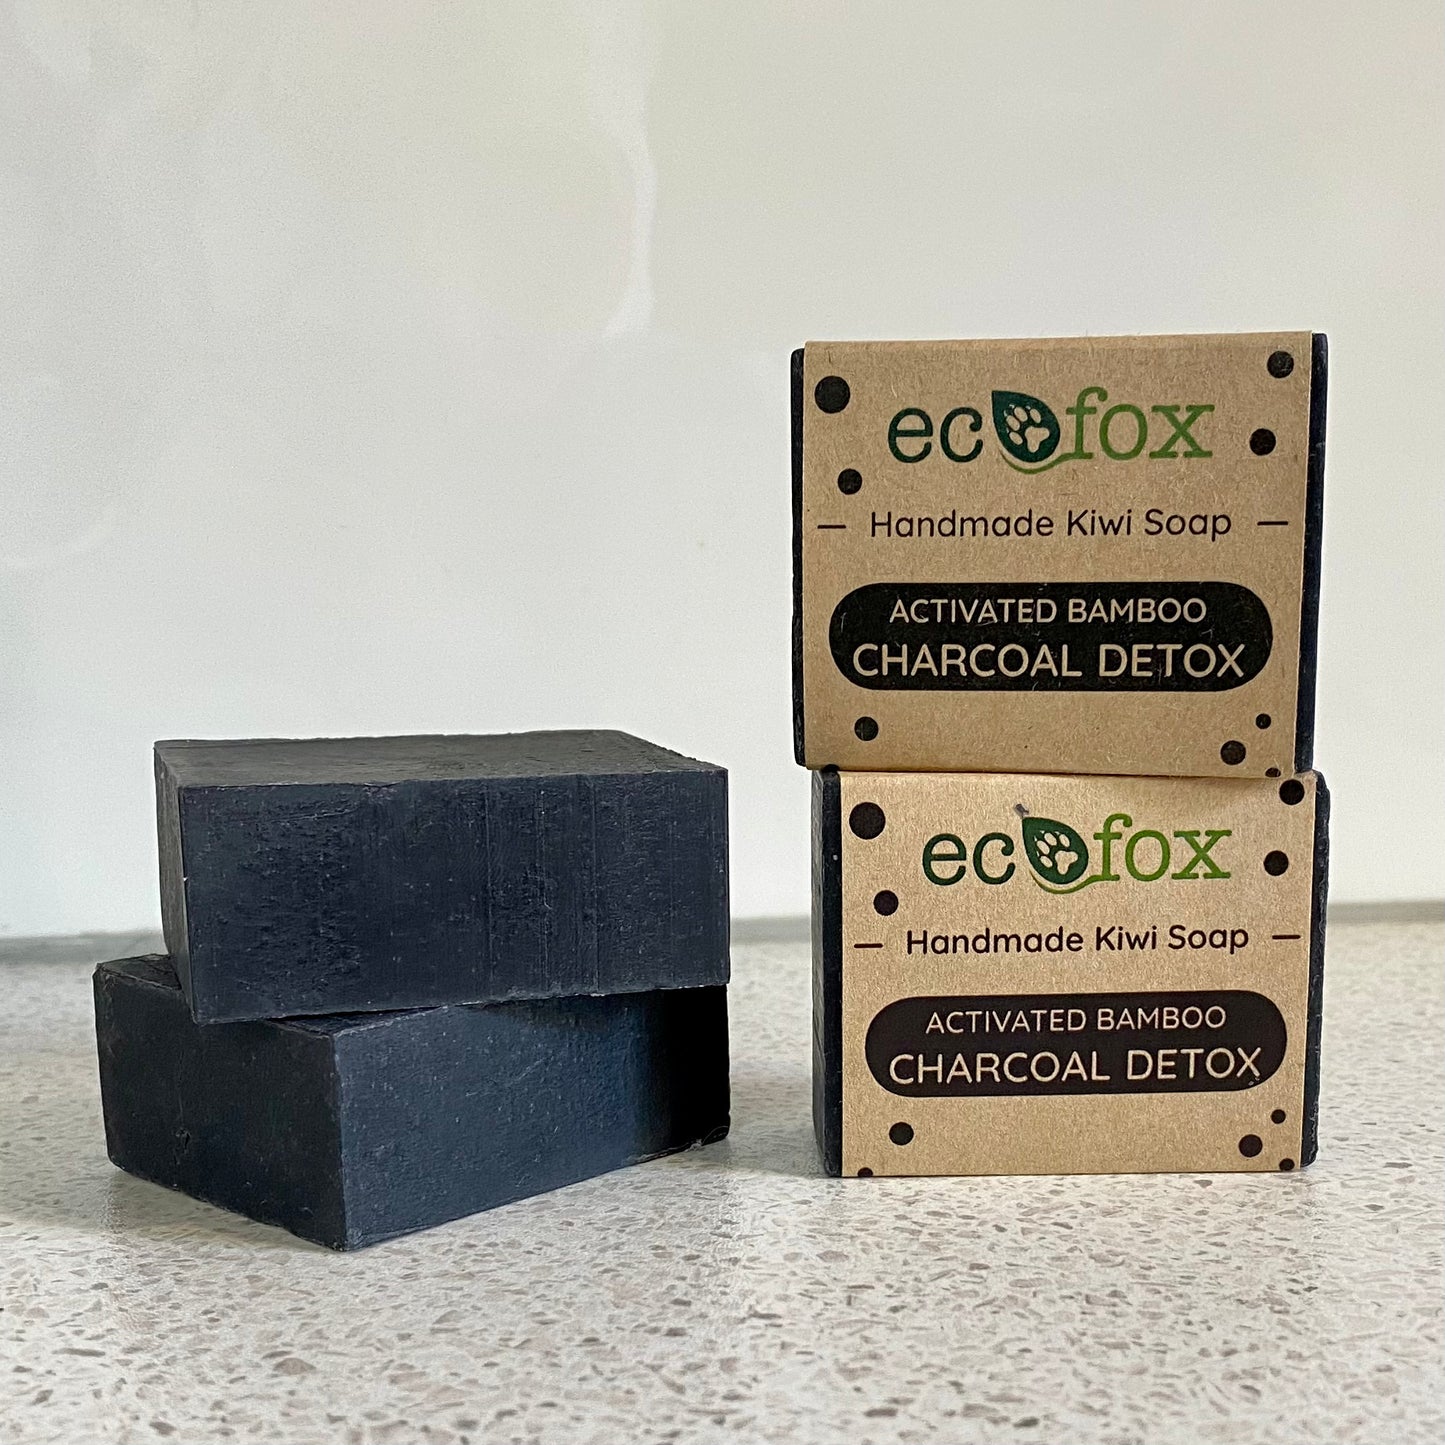 Charcoal Detox natural handmade facial soap bar